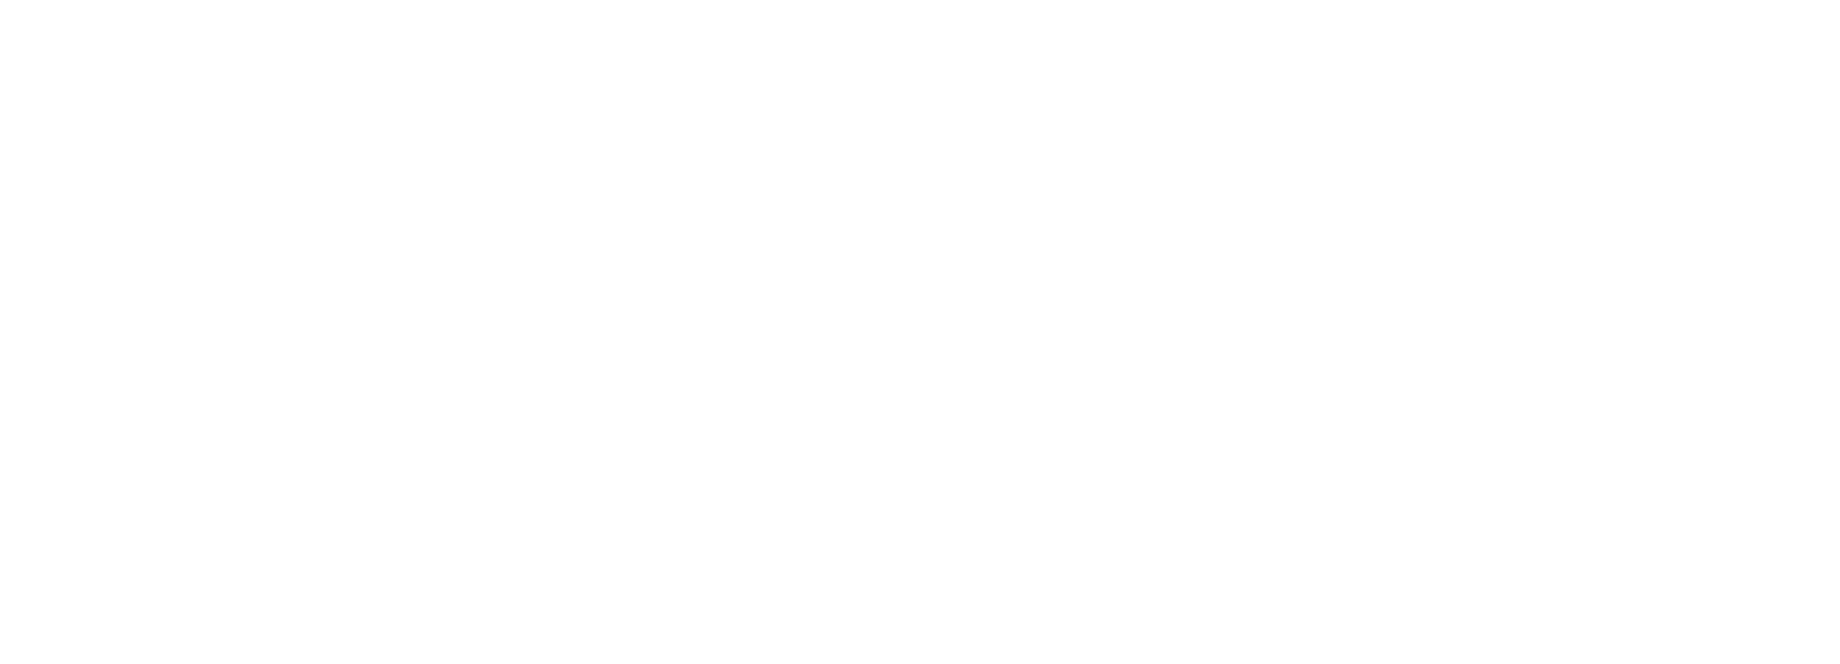 AFN 2021 logo – vertical – white